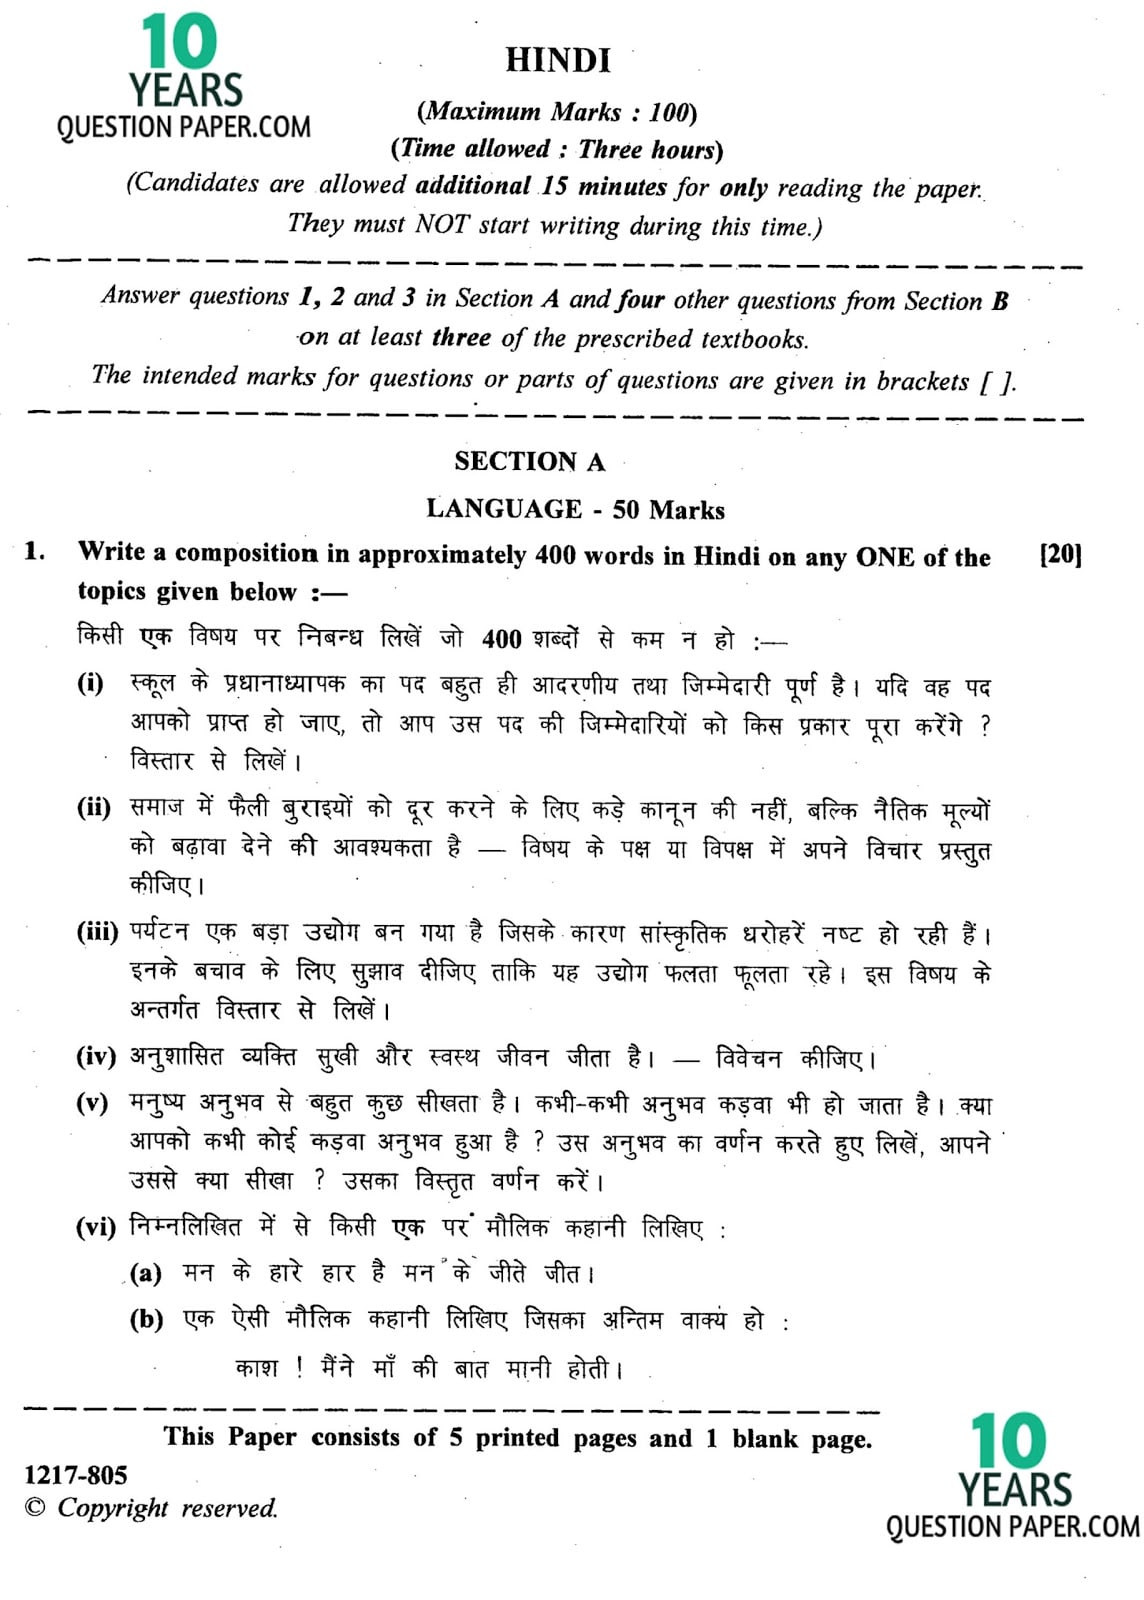 Essay on newspaper in hindi